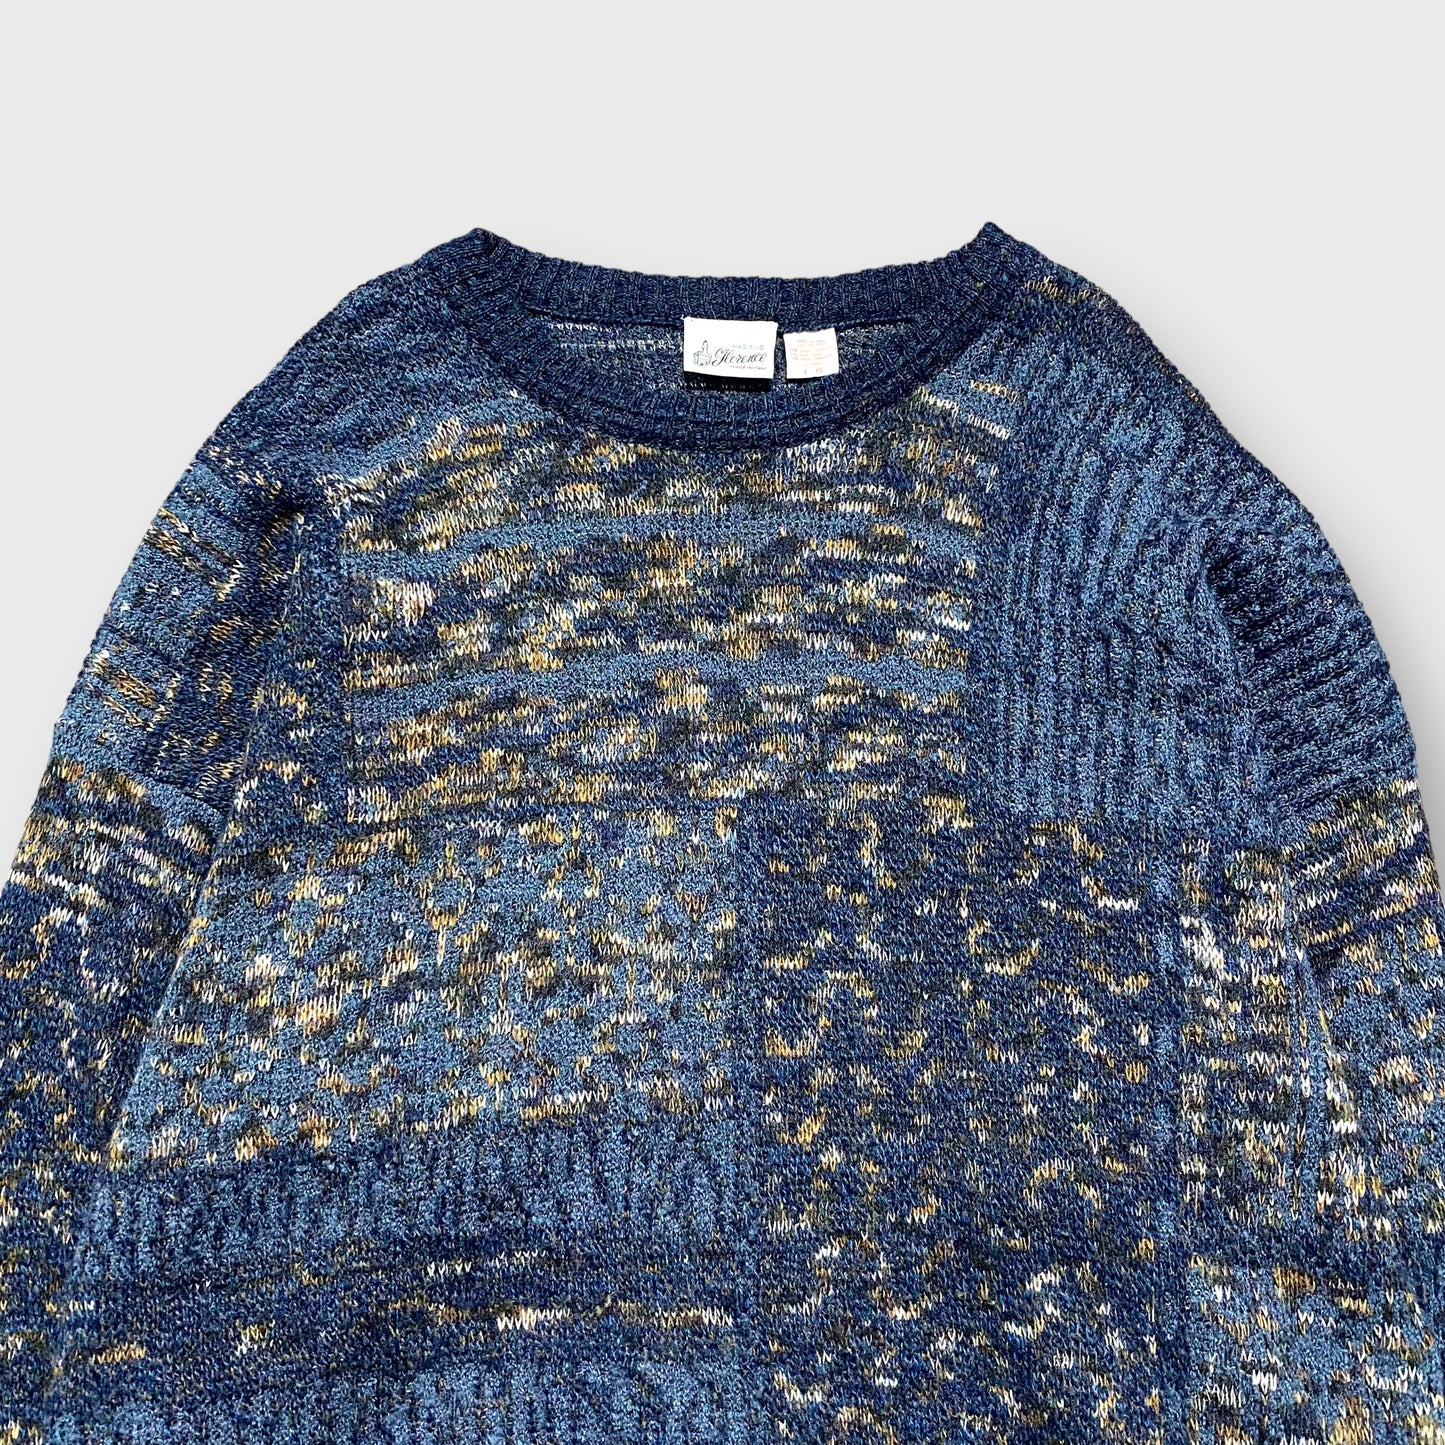 Multi pattern knit sweater